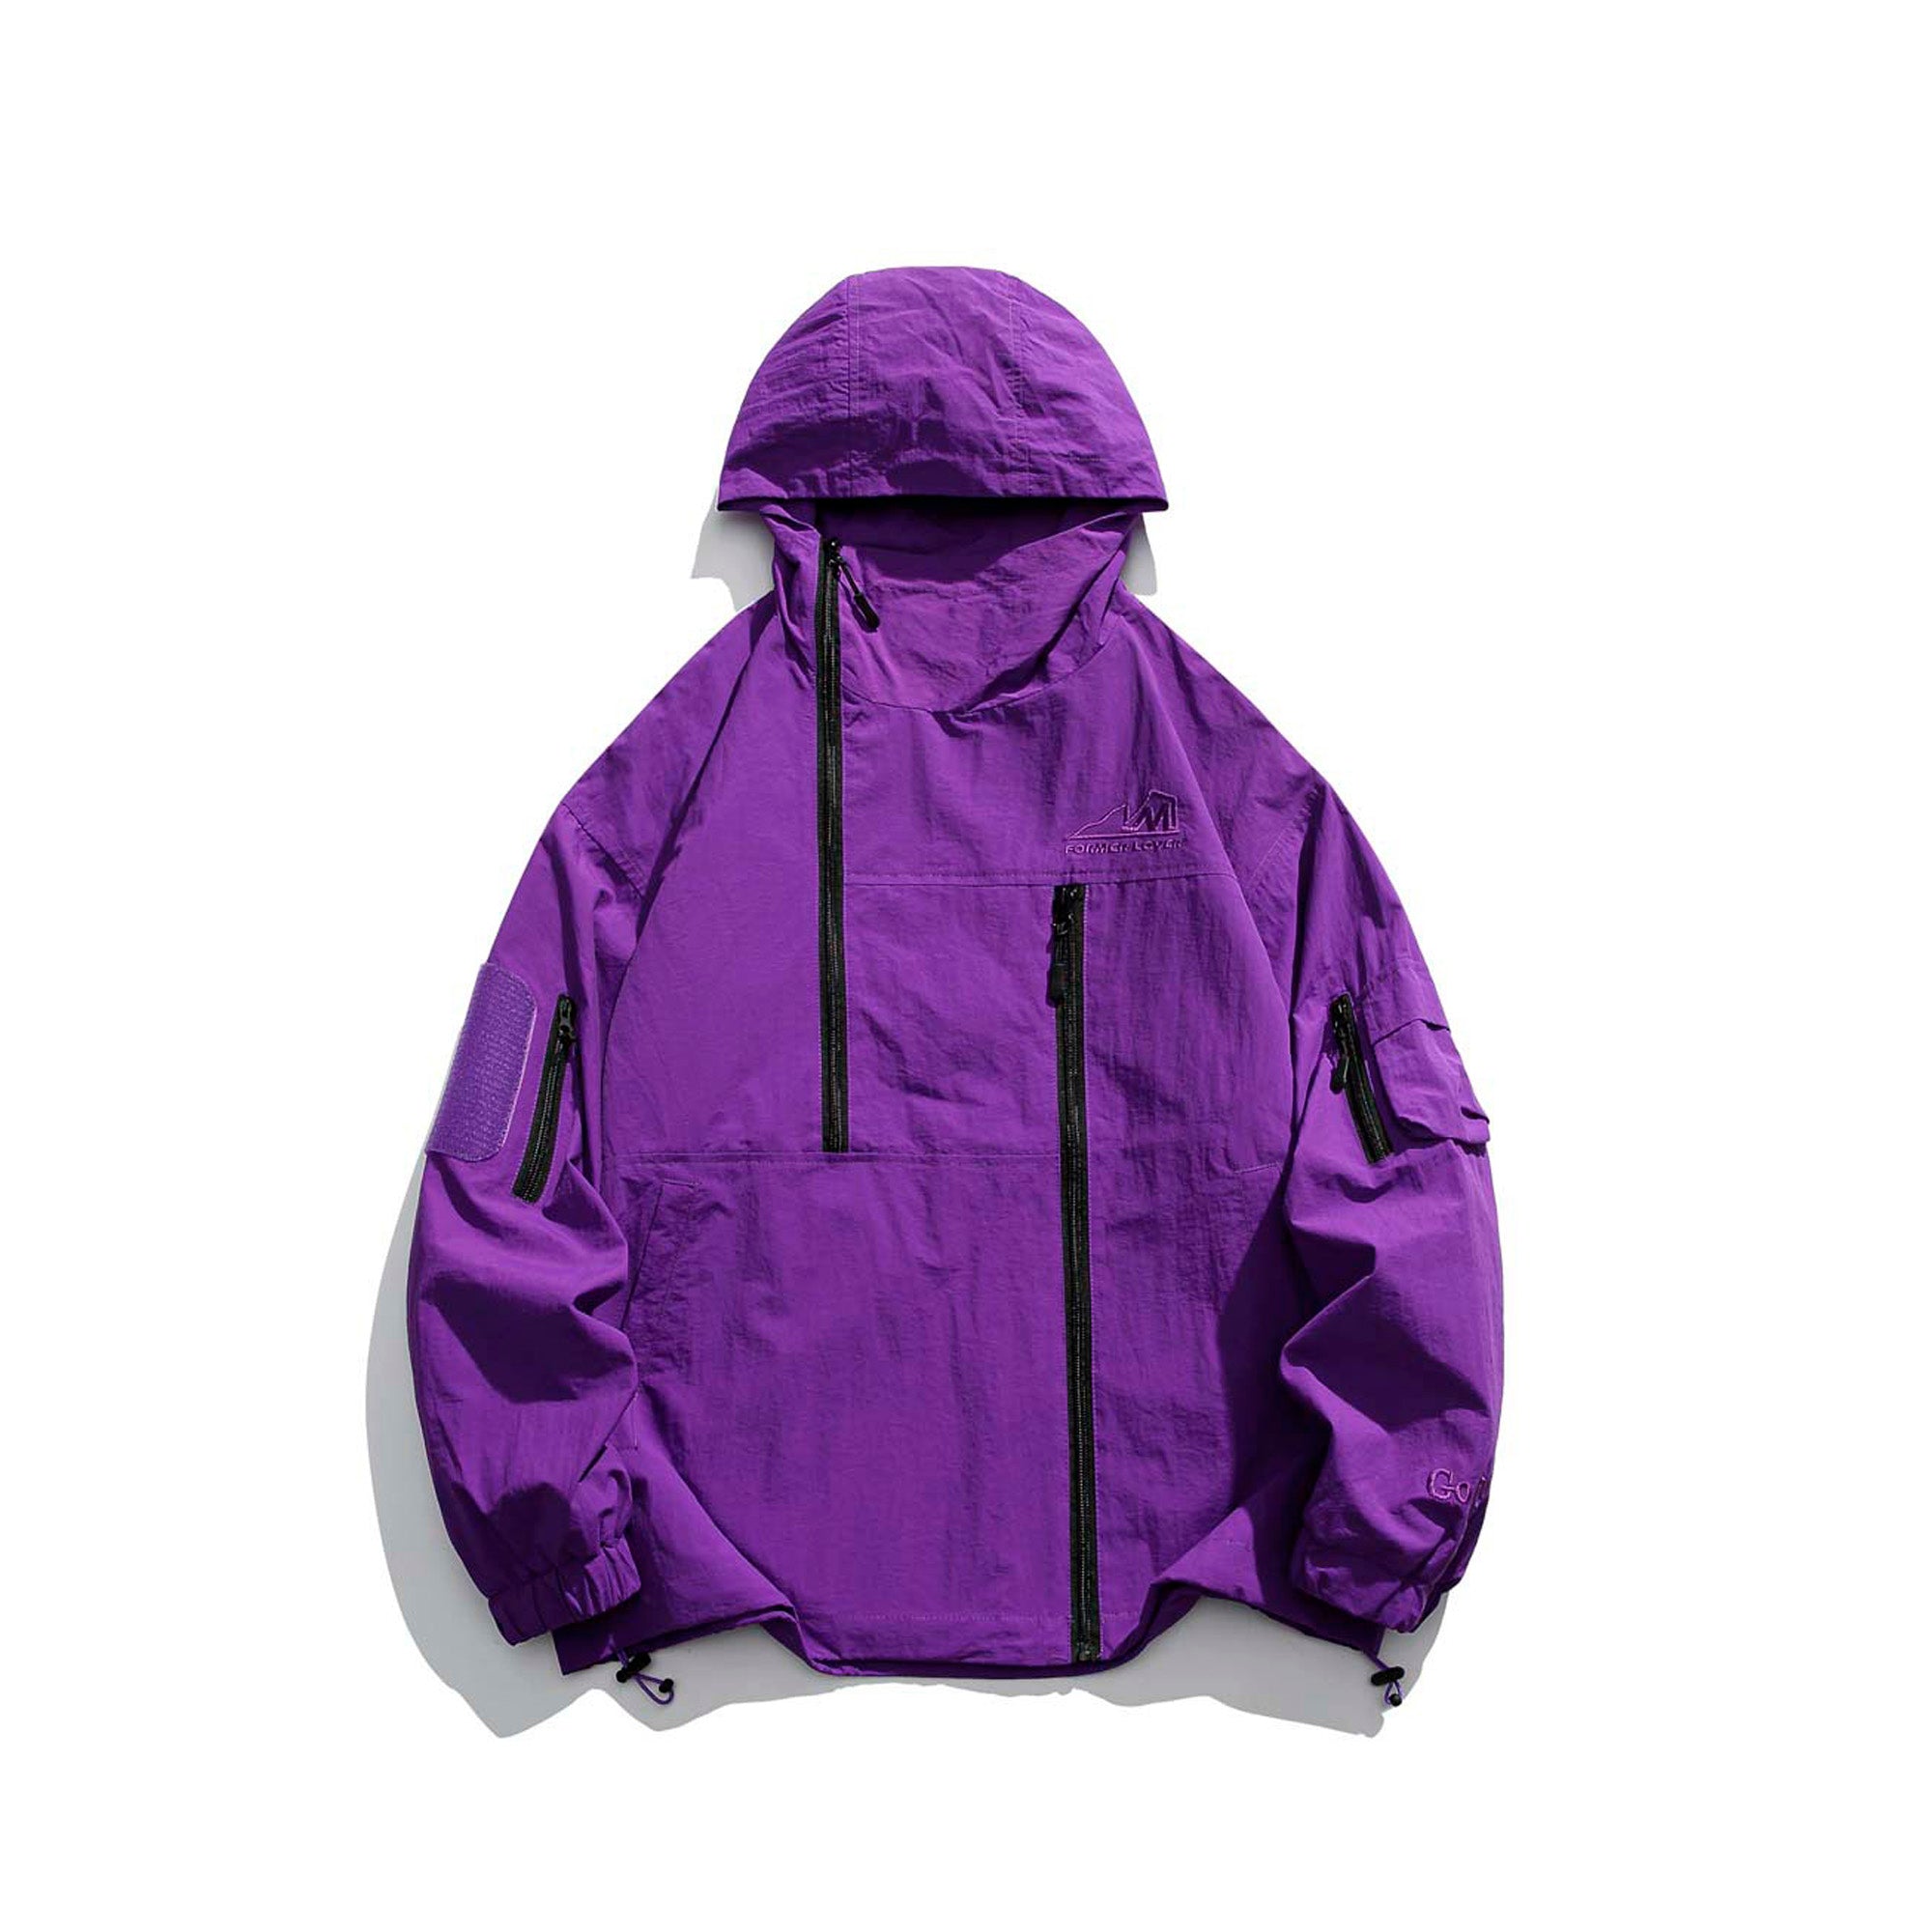 Additional Color Line Hooded Jacket